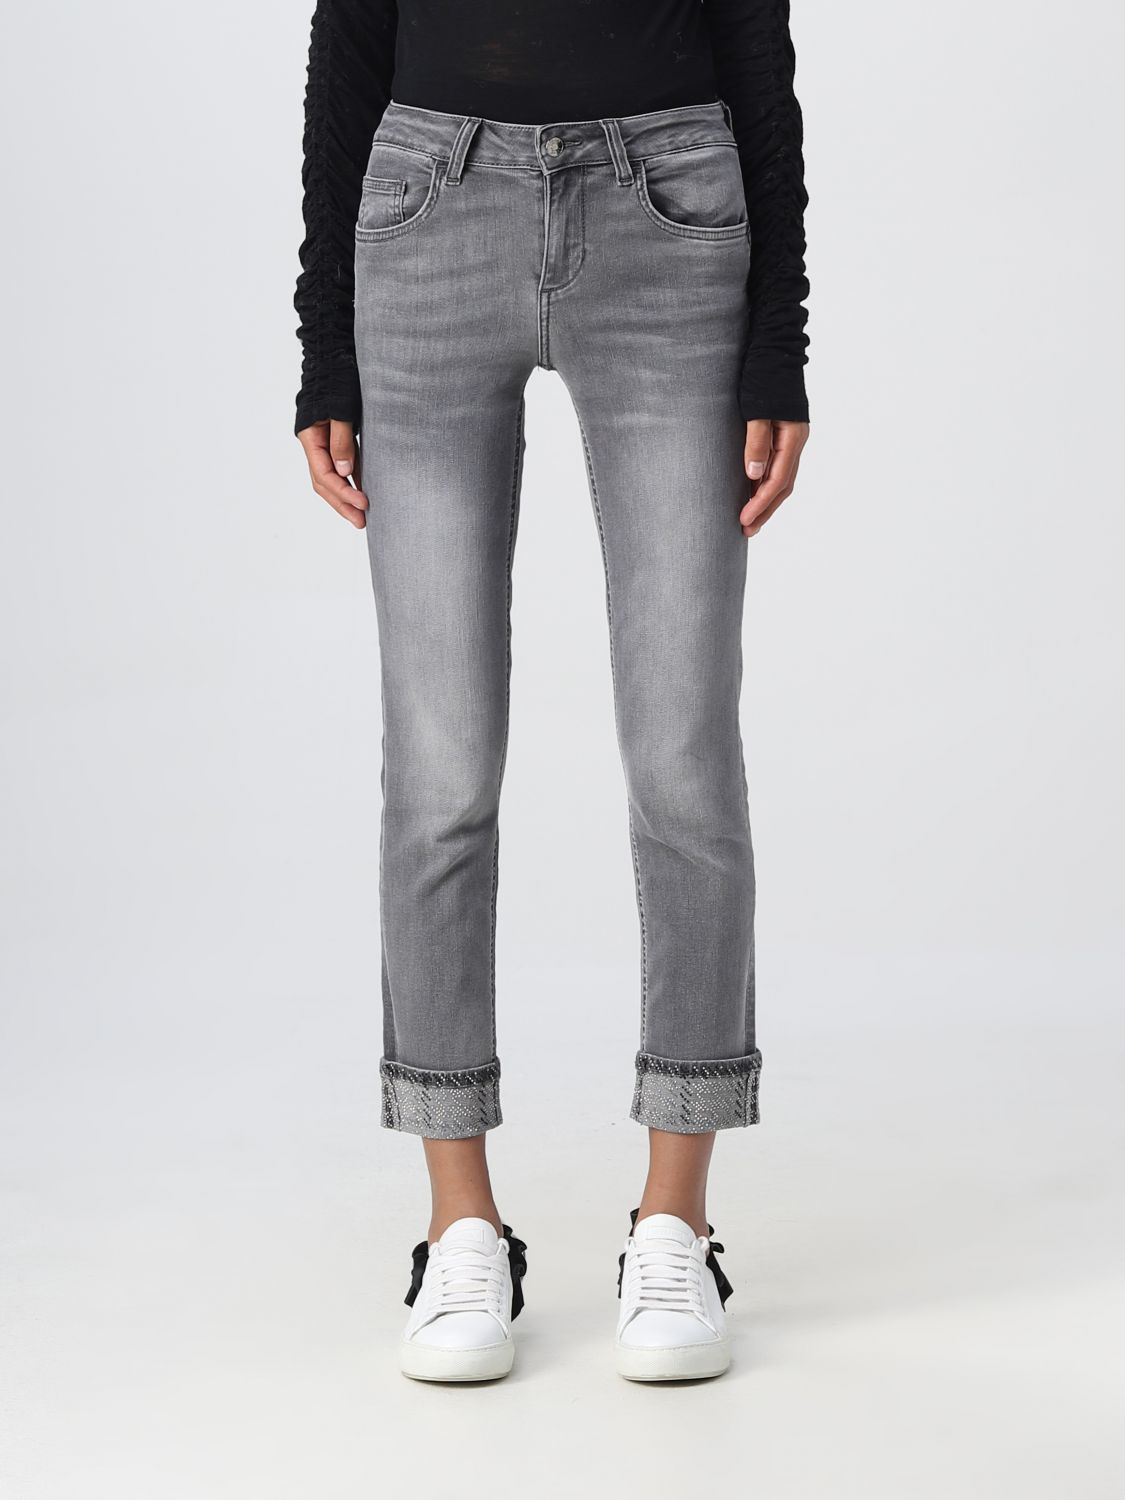 Afleiden Telemacos Besmetten Liu Jo Outlet: jeans for woman - Grey | Liu Jo jeans UF2006D4615 online on  GIGLIO.COM